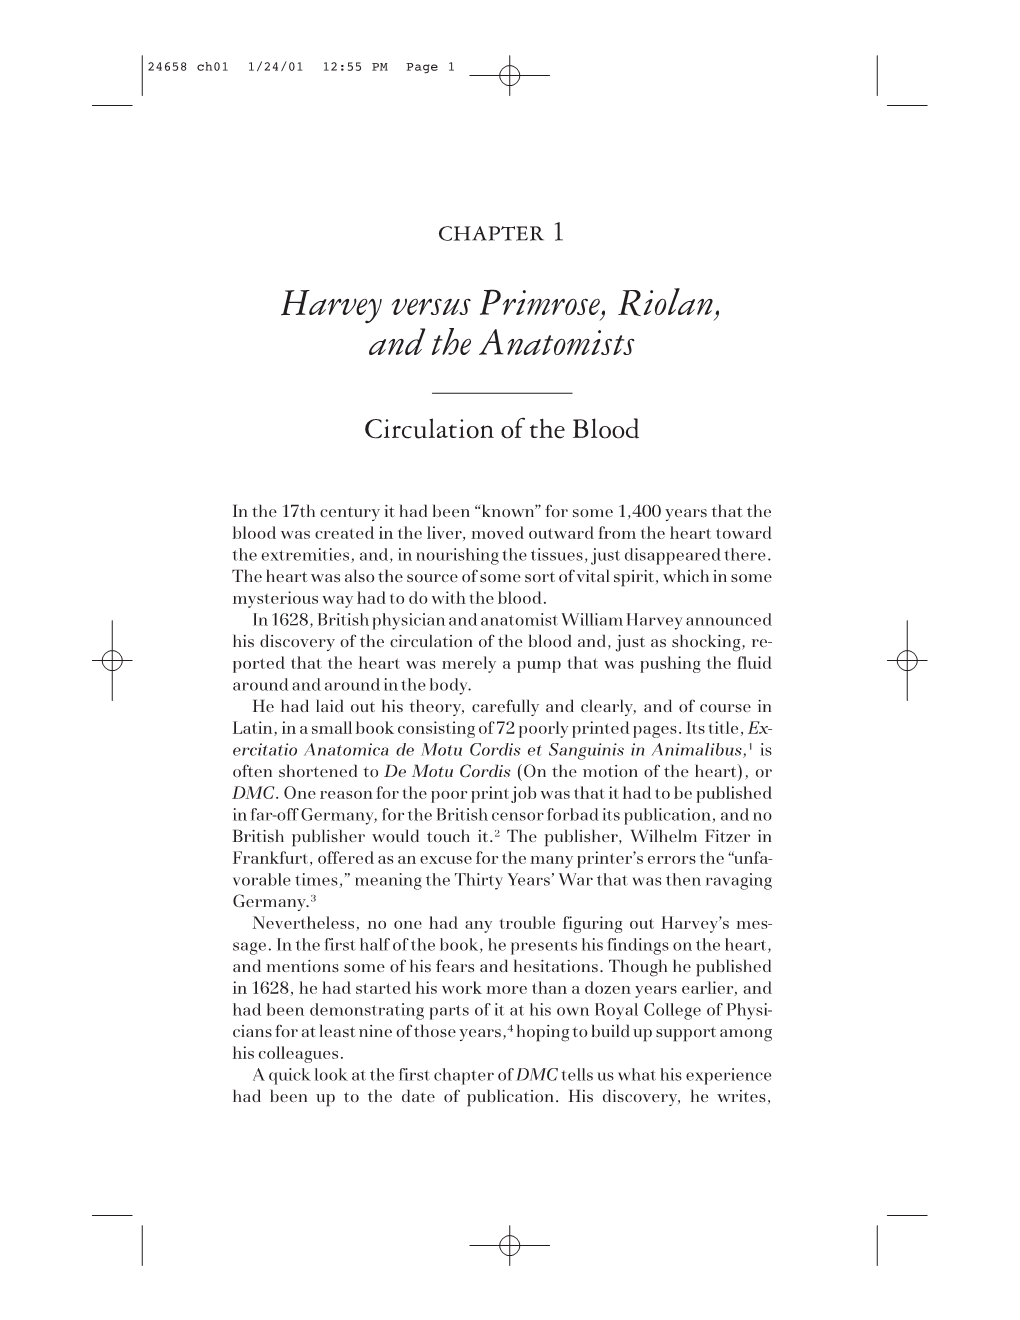 Harvey Versus Primrose, Riolan, and the Anatomists